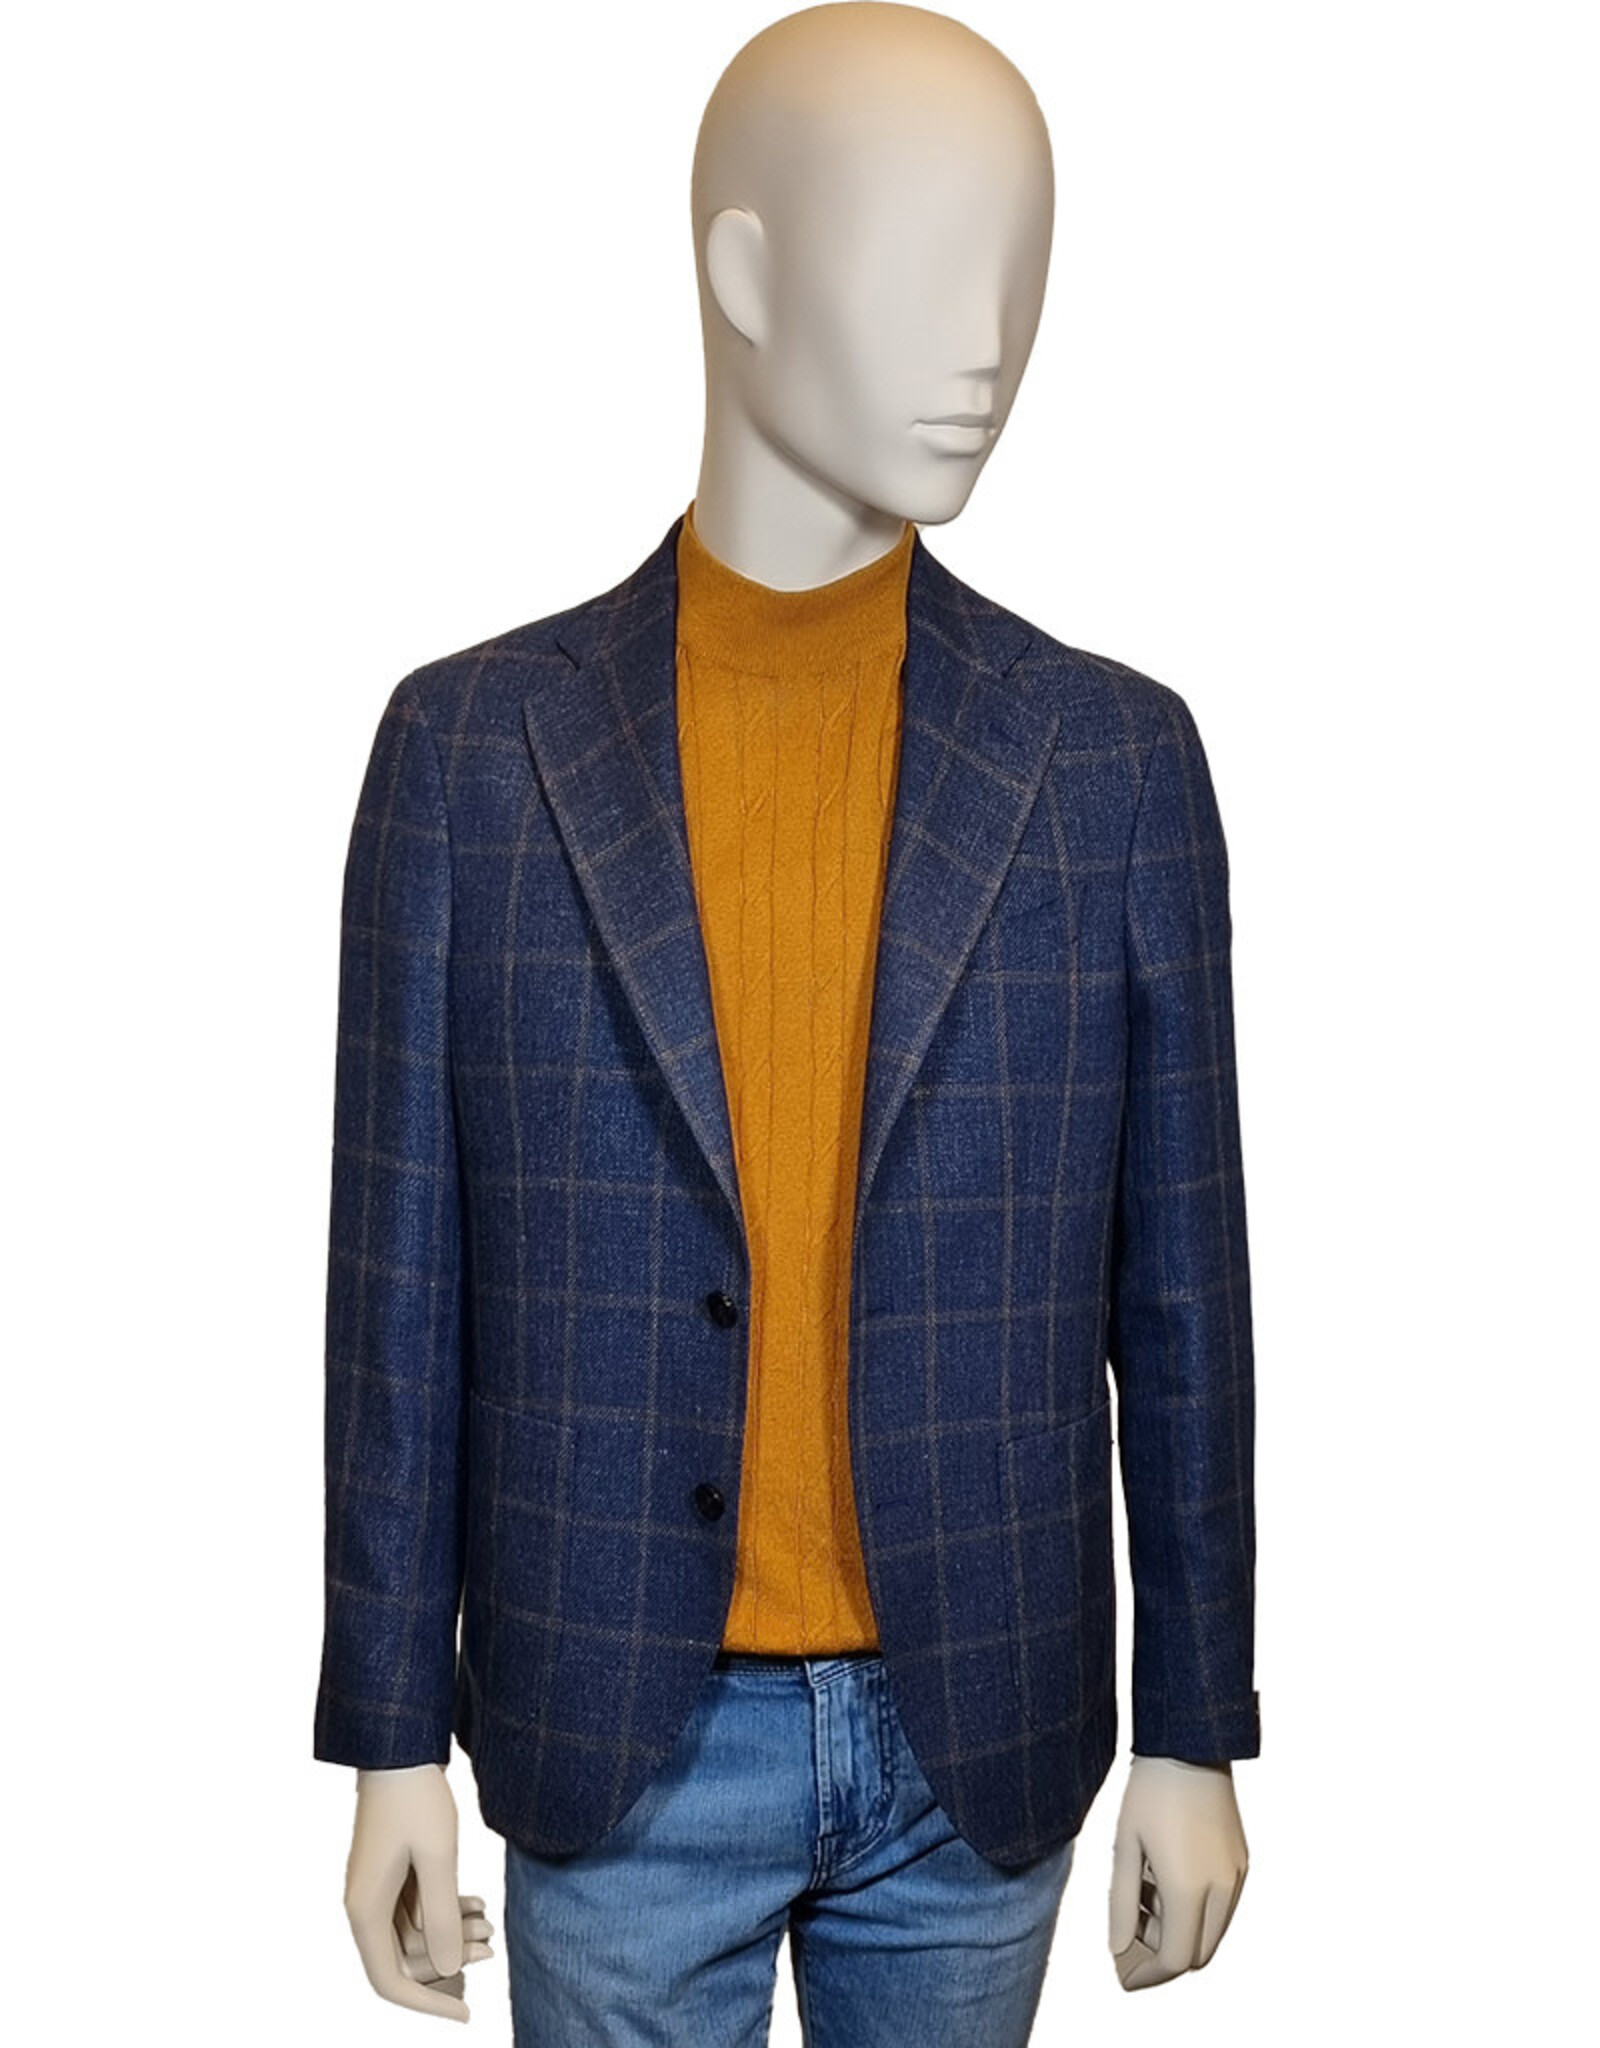 Latorre Gabiati jacket blue-beige check t QF0923/100 M:F84